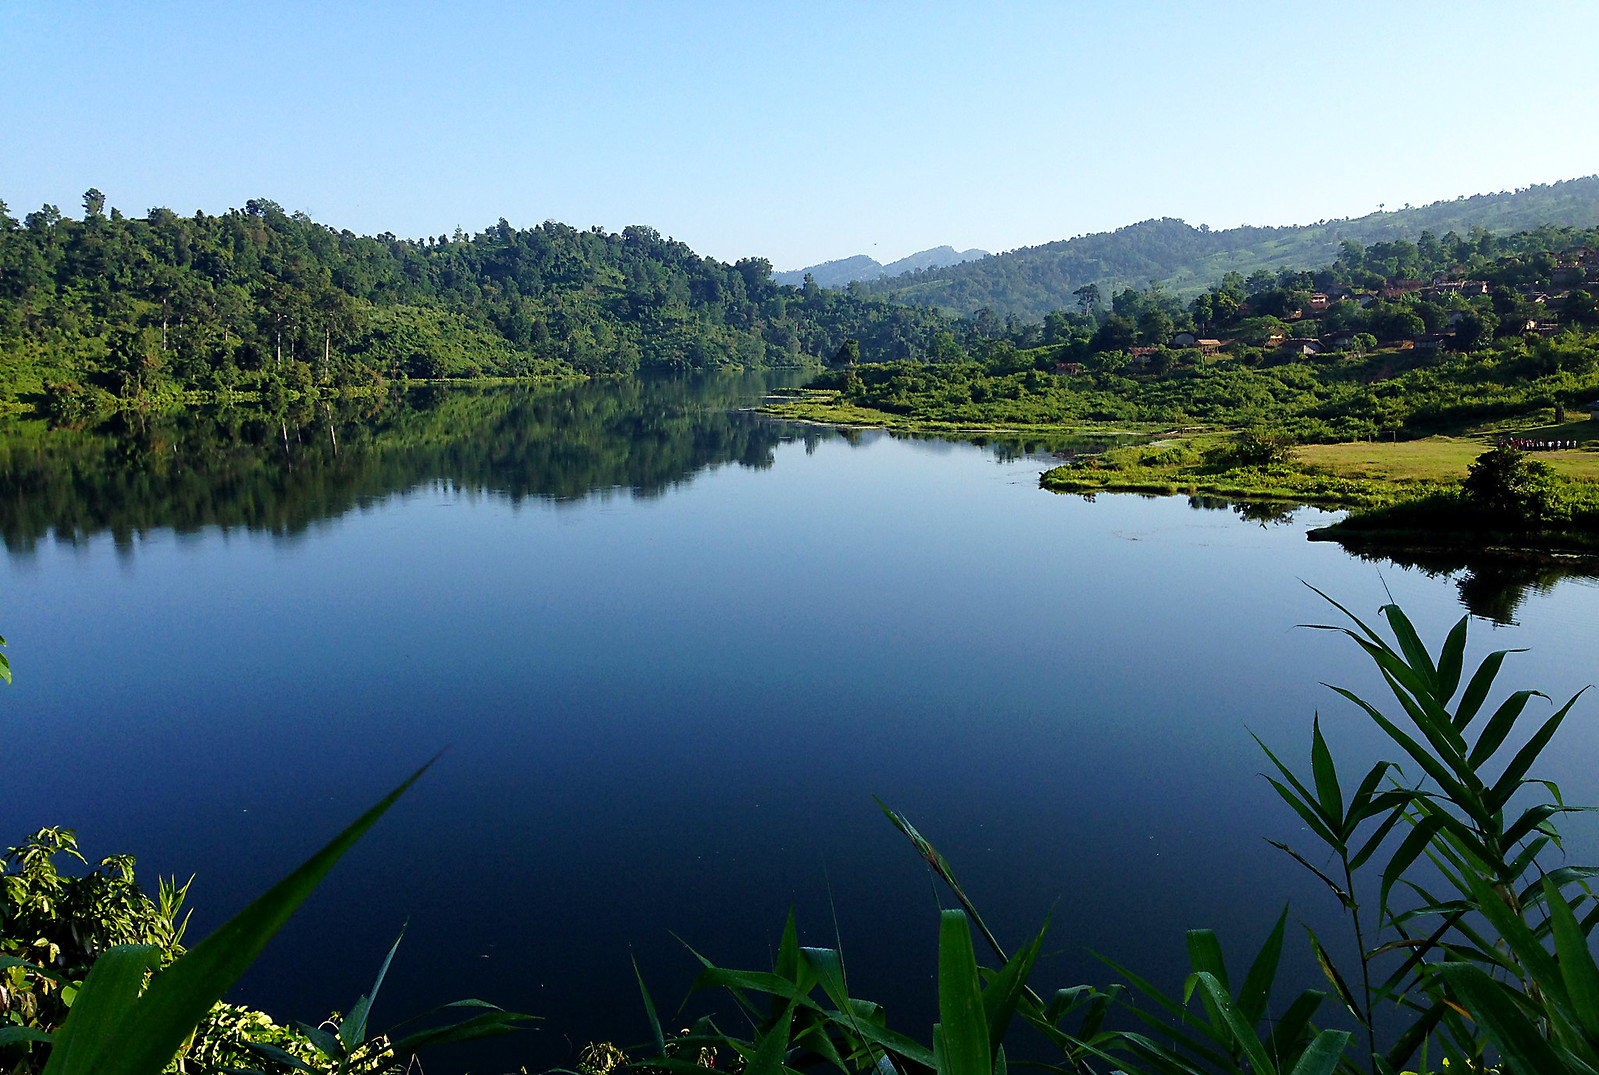 Raikhong Lake